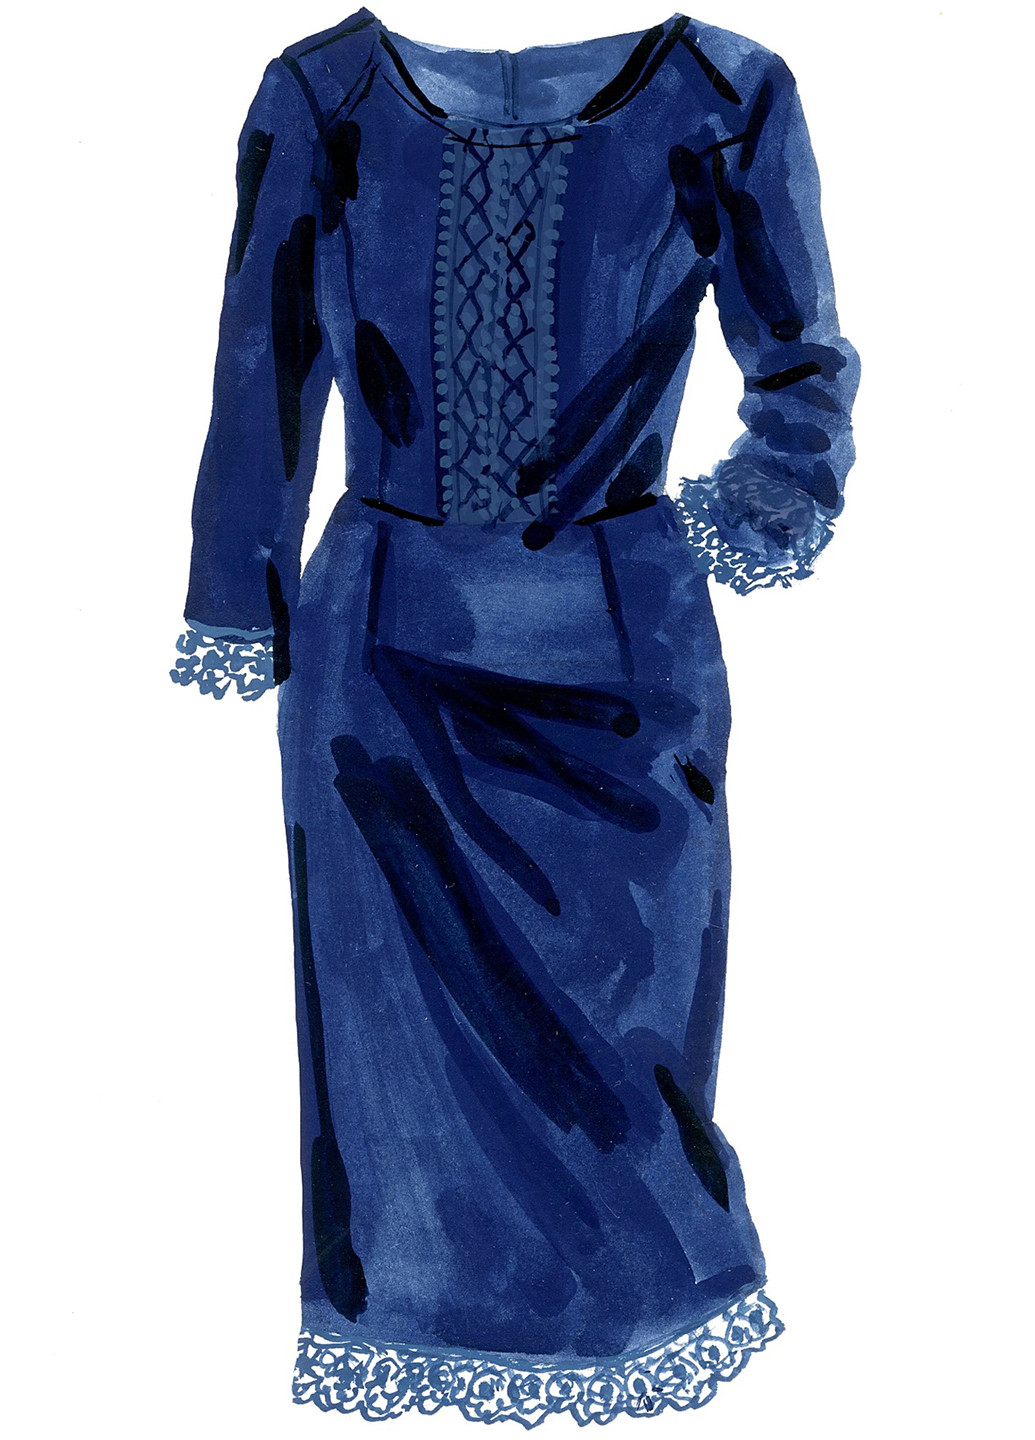 Темно-синее кэжуал платье футляр The J. Peterman Company однотонное